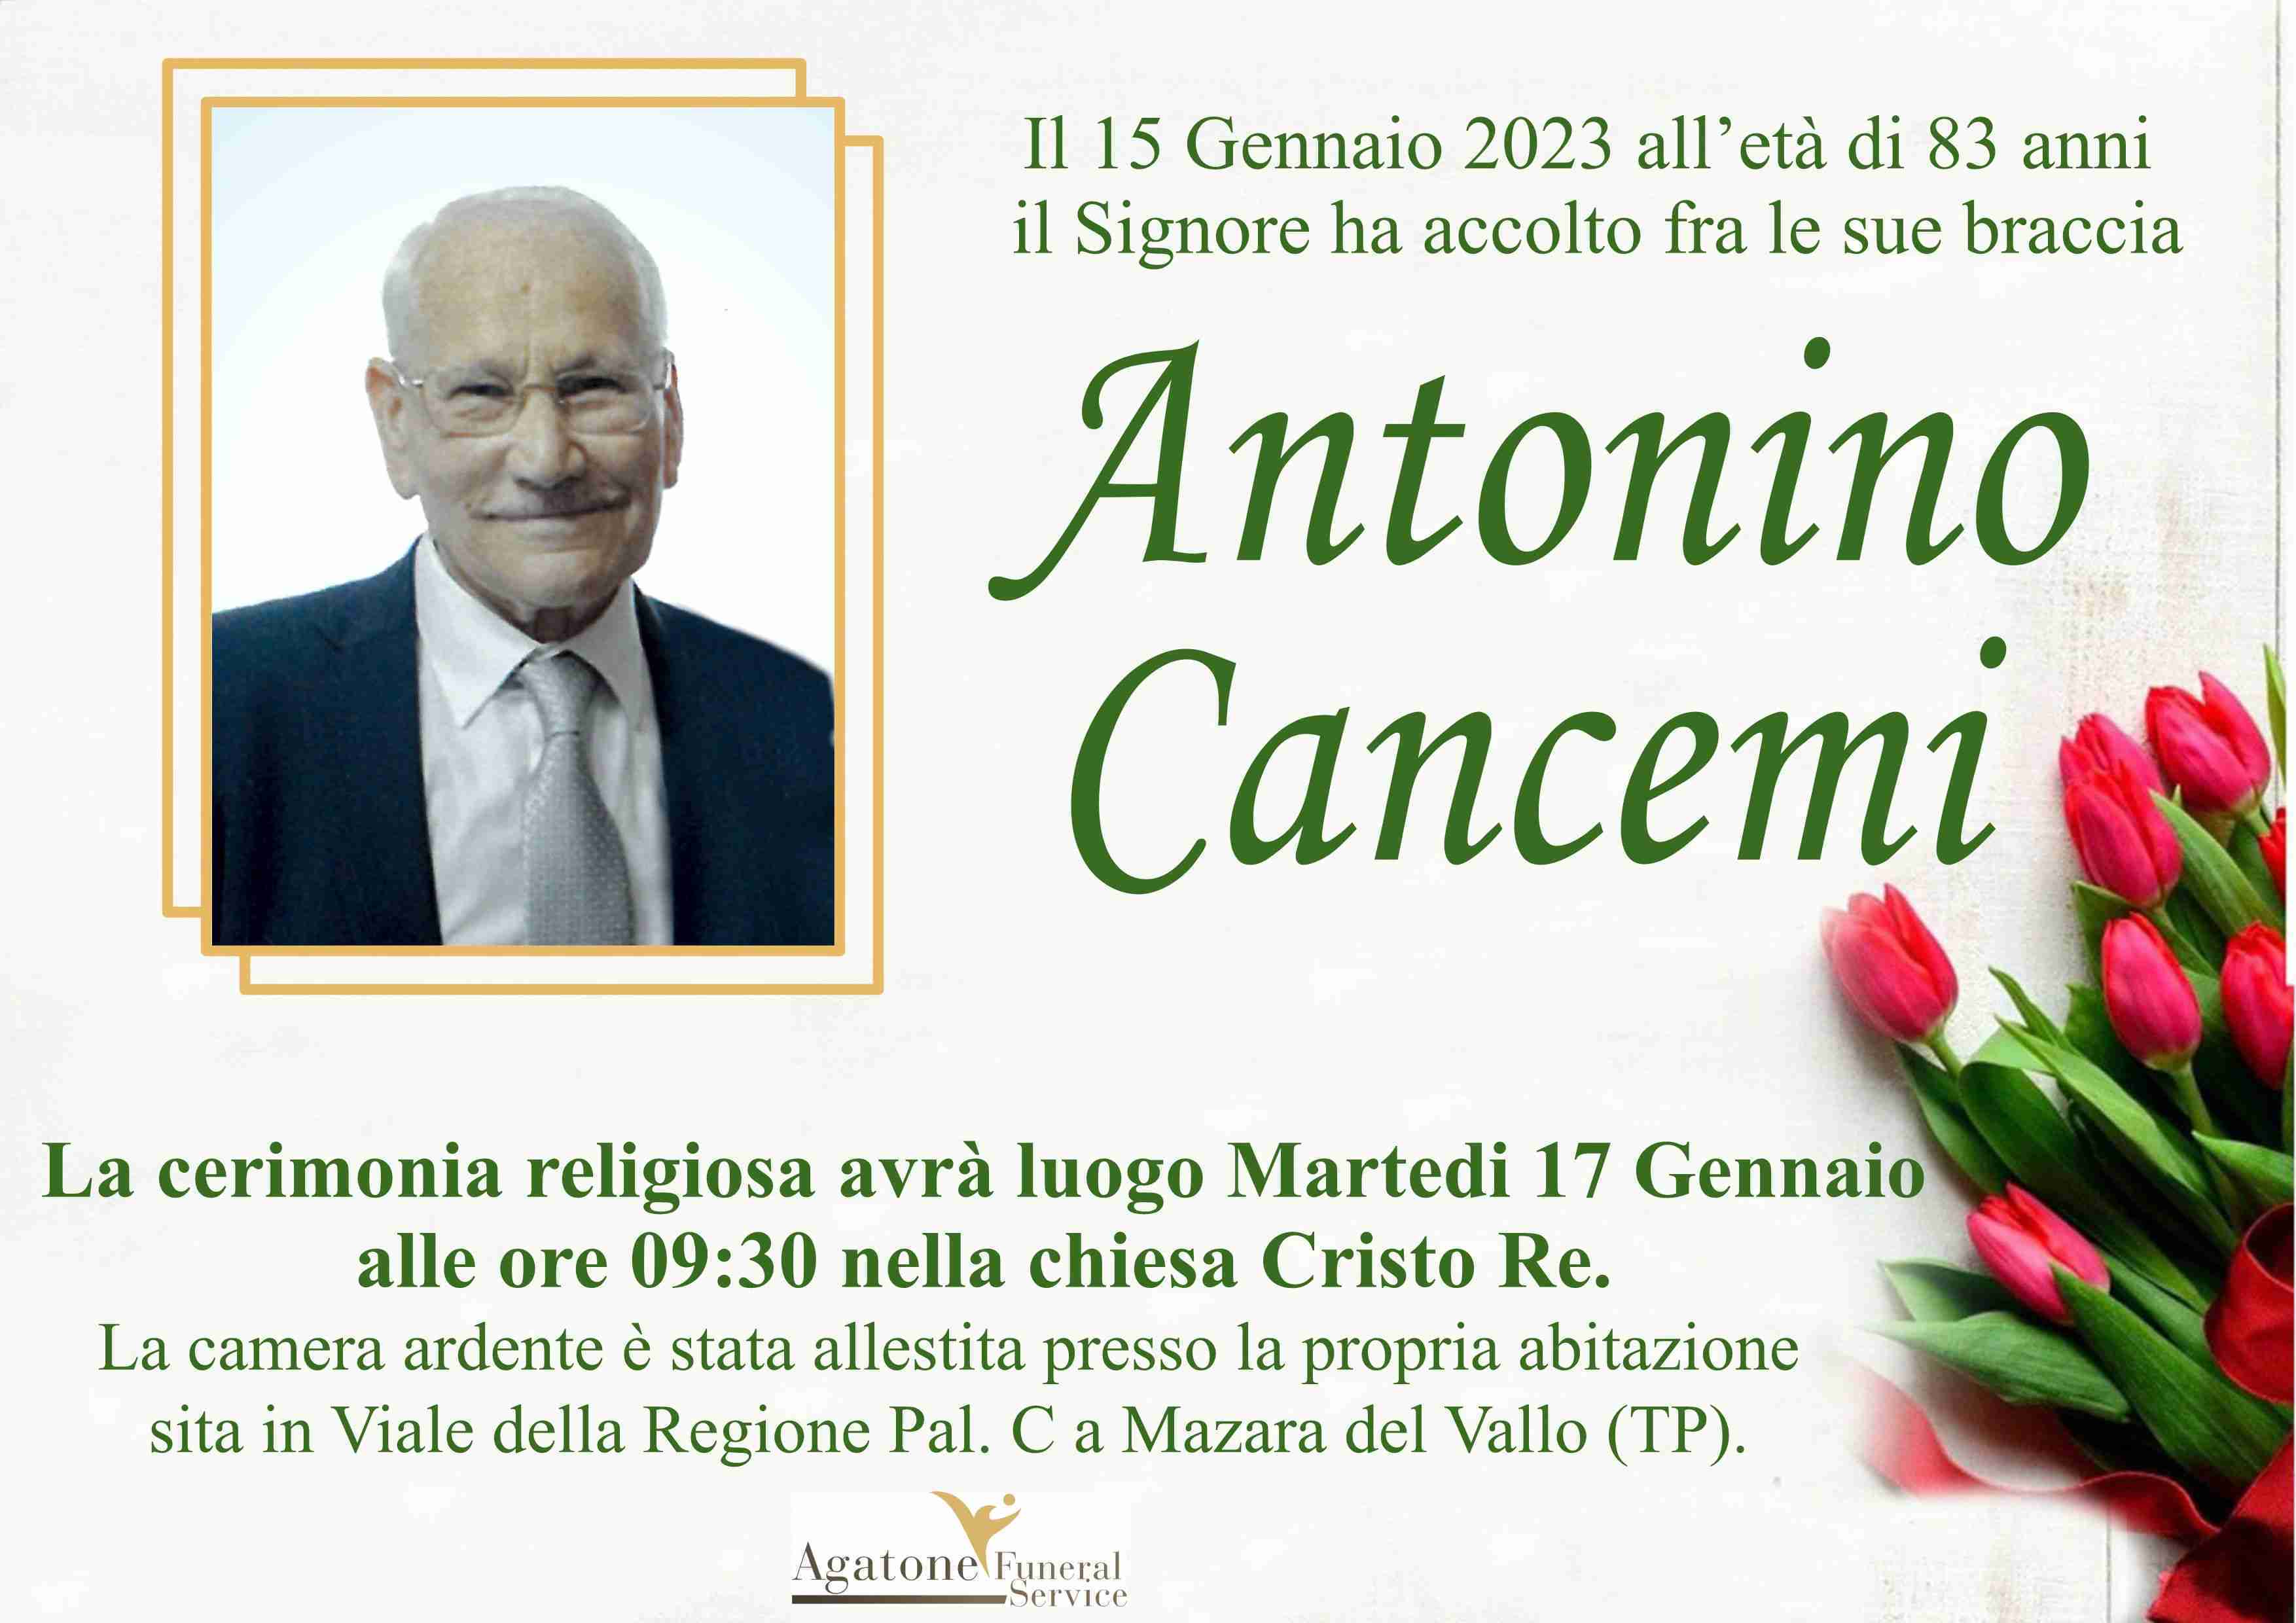 Antonino Cancemi